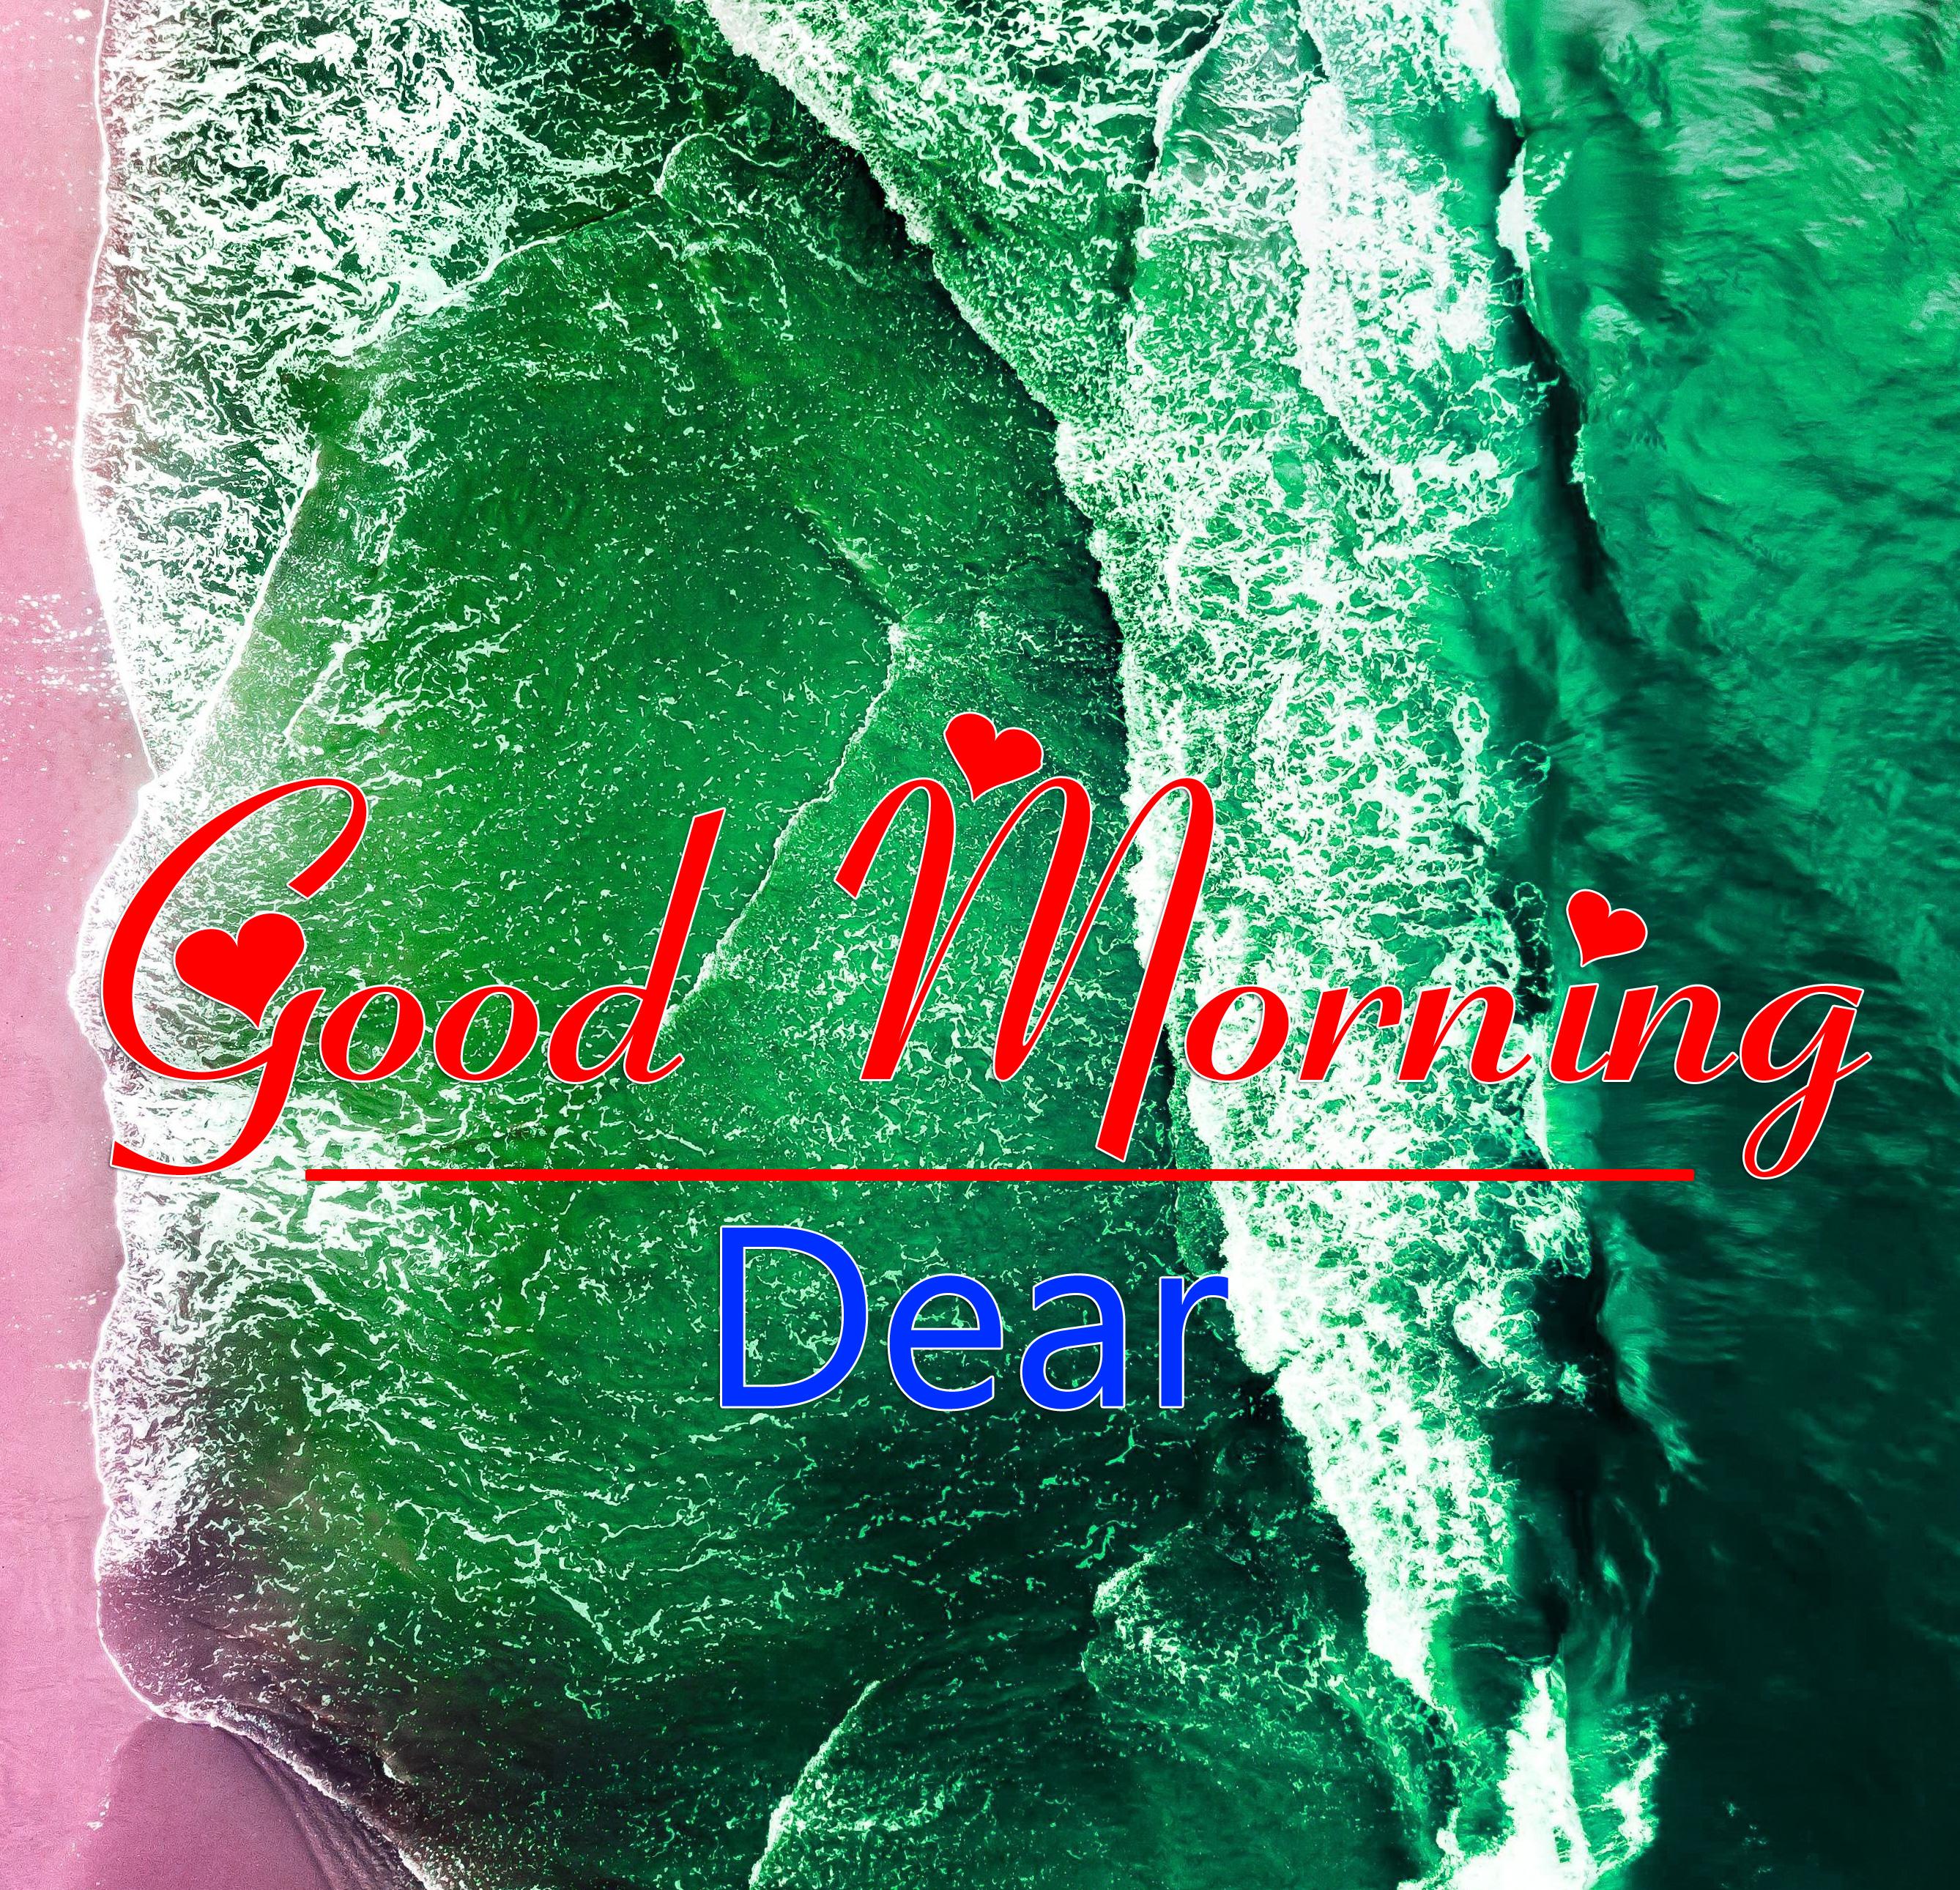 Great Good Morning Whatsapp DP Profile Images Wallpaper Pics Download 